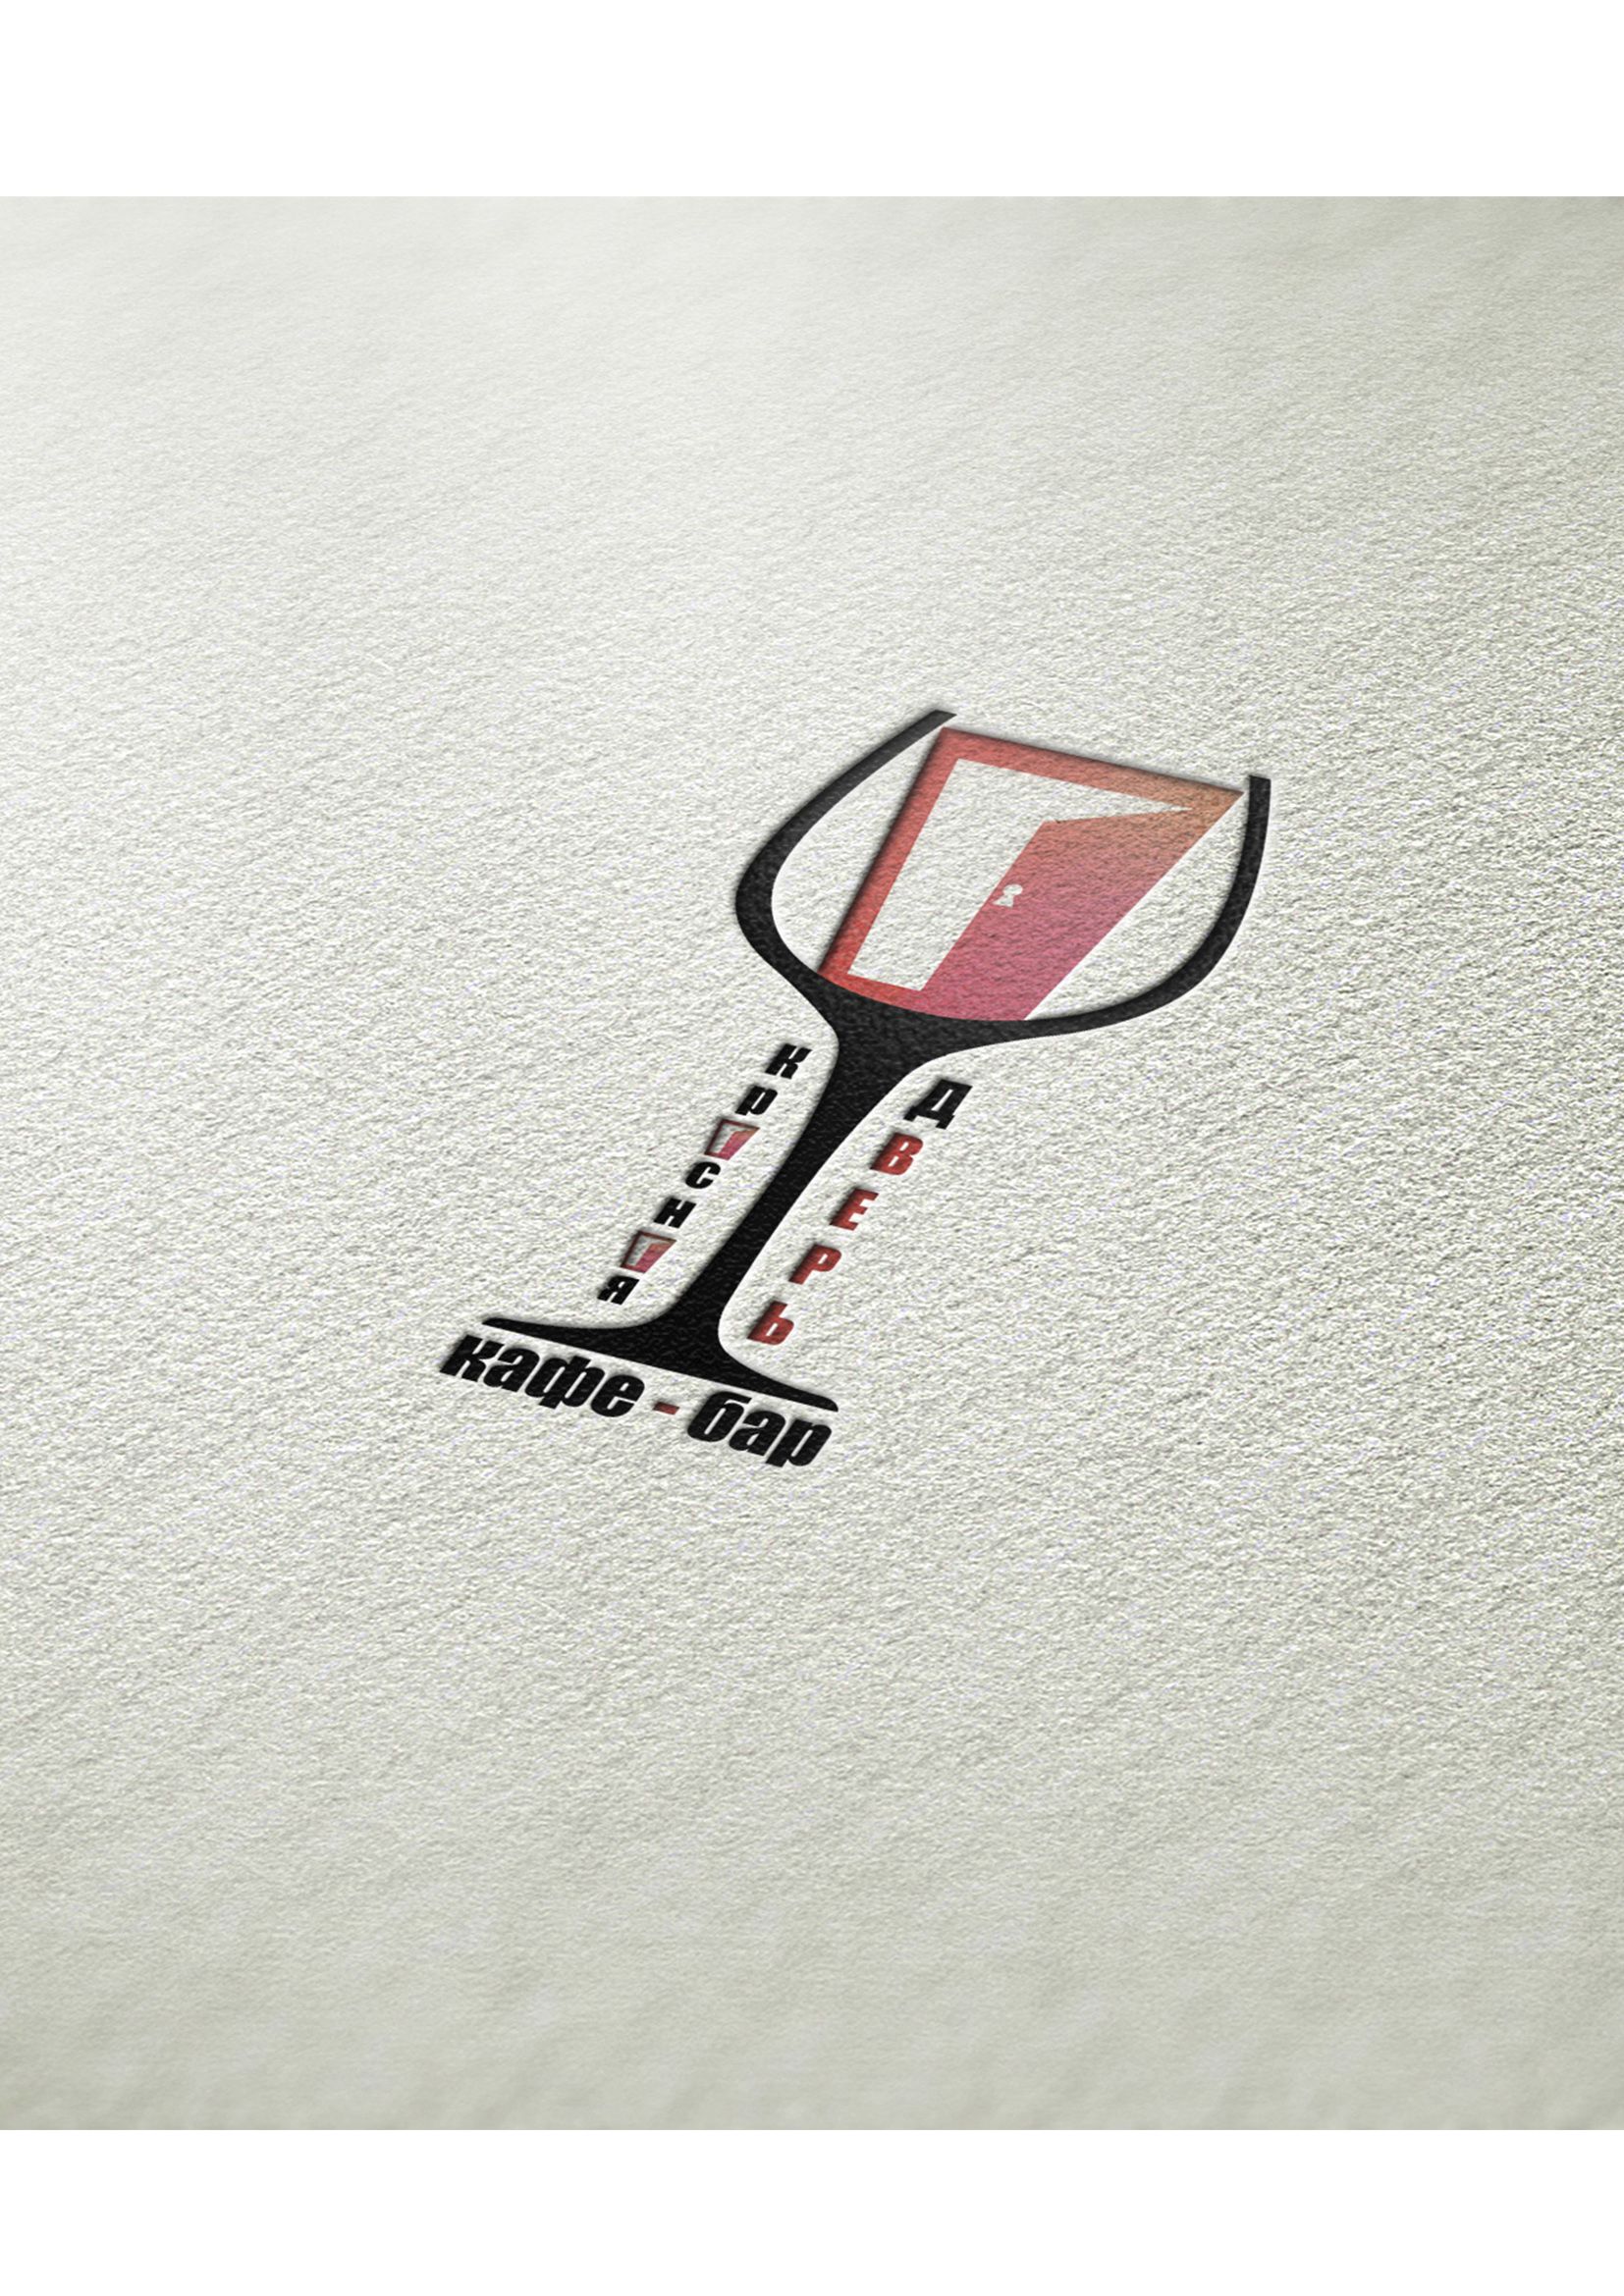 Логотип для Кафе-бар Красная Дверь - дизайнер MaxBovkun